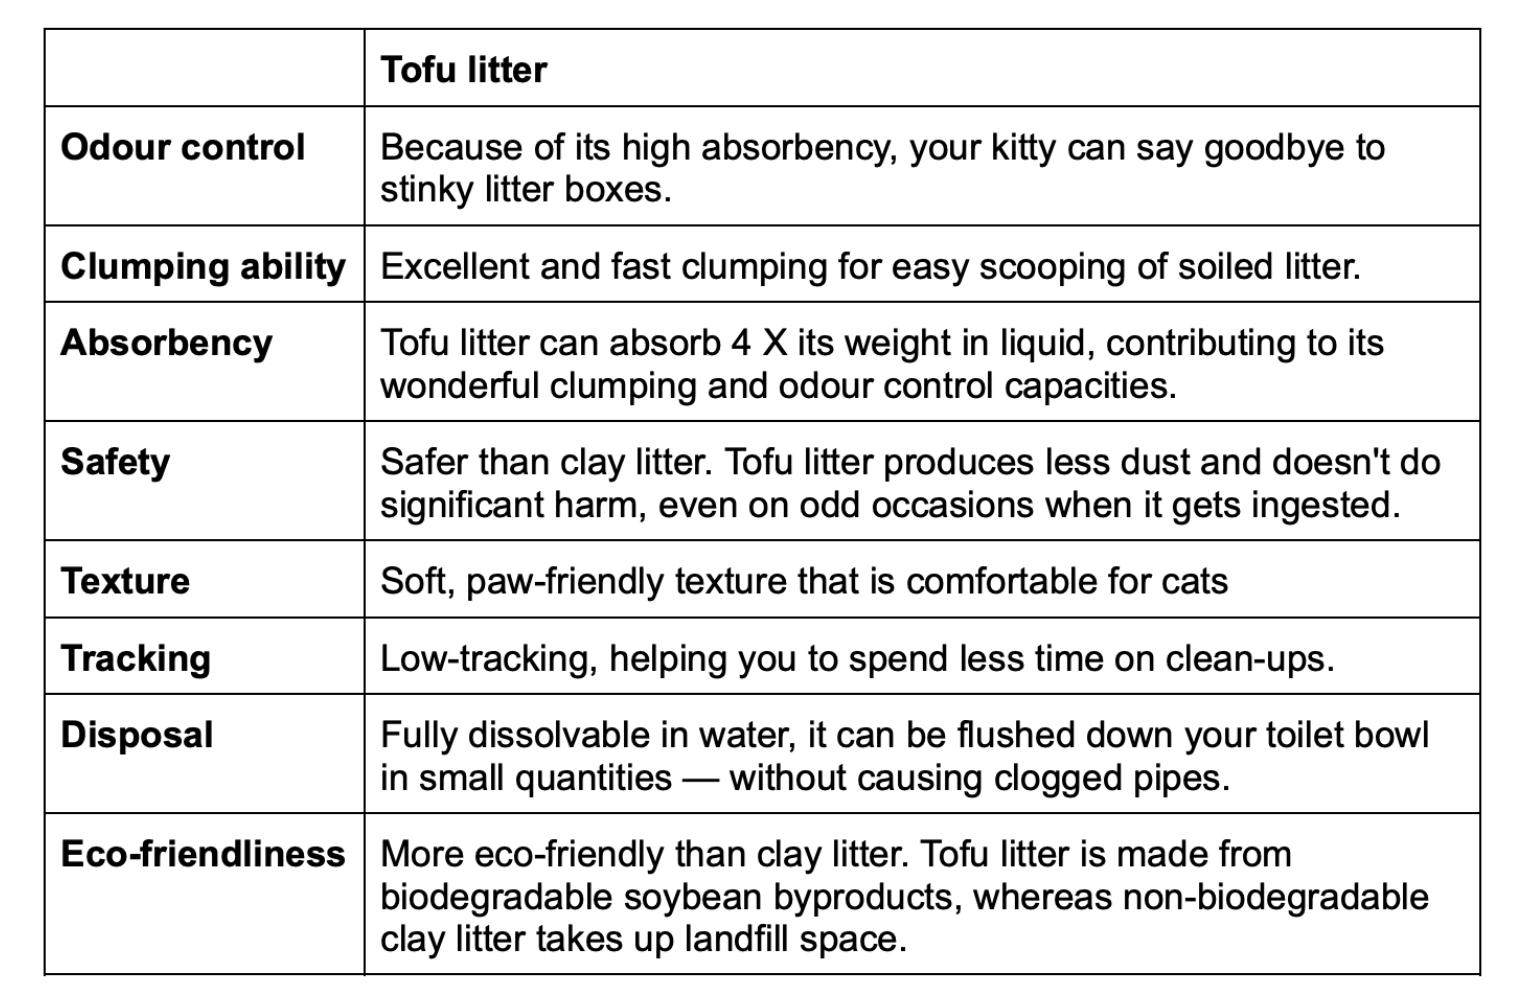 benefits of tofu litter